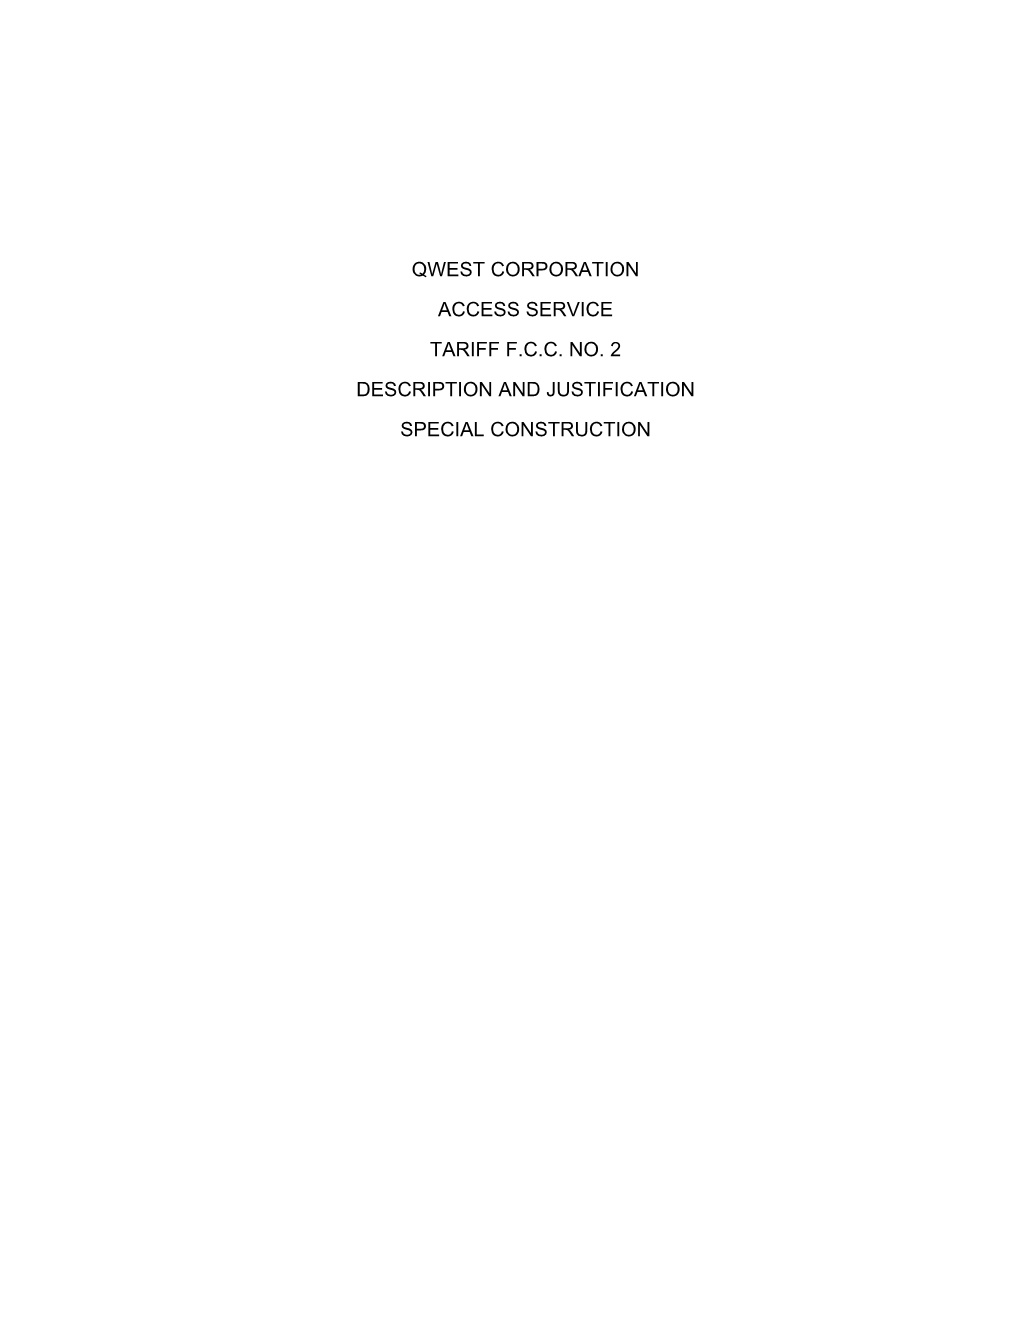 Qwest Corporation Access Service Tariff F.C.C. No. 2 Description and Justification Special Construction